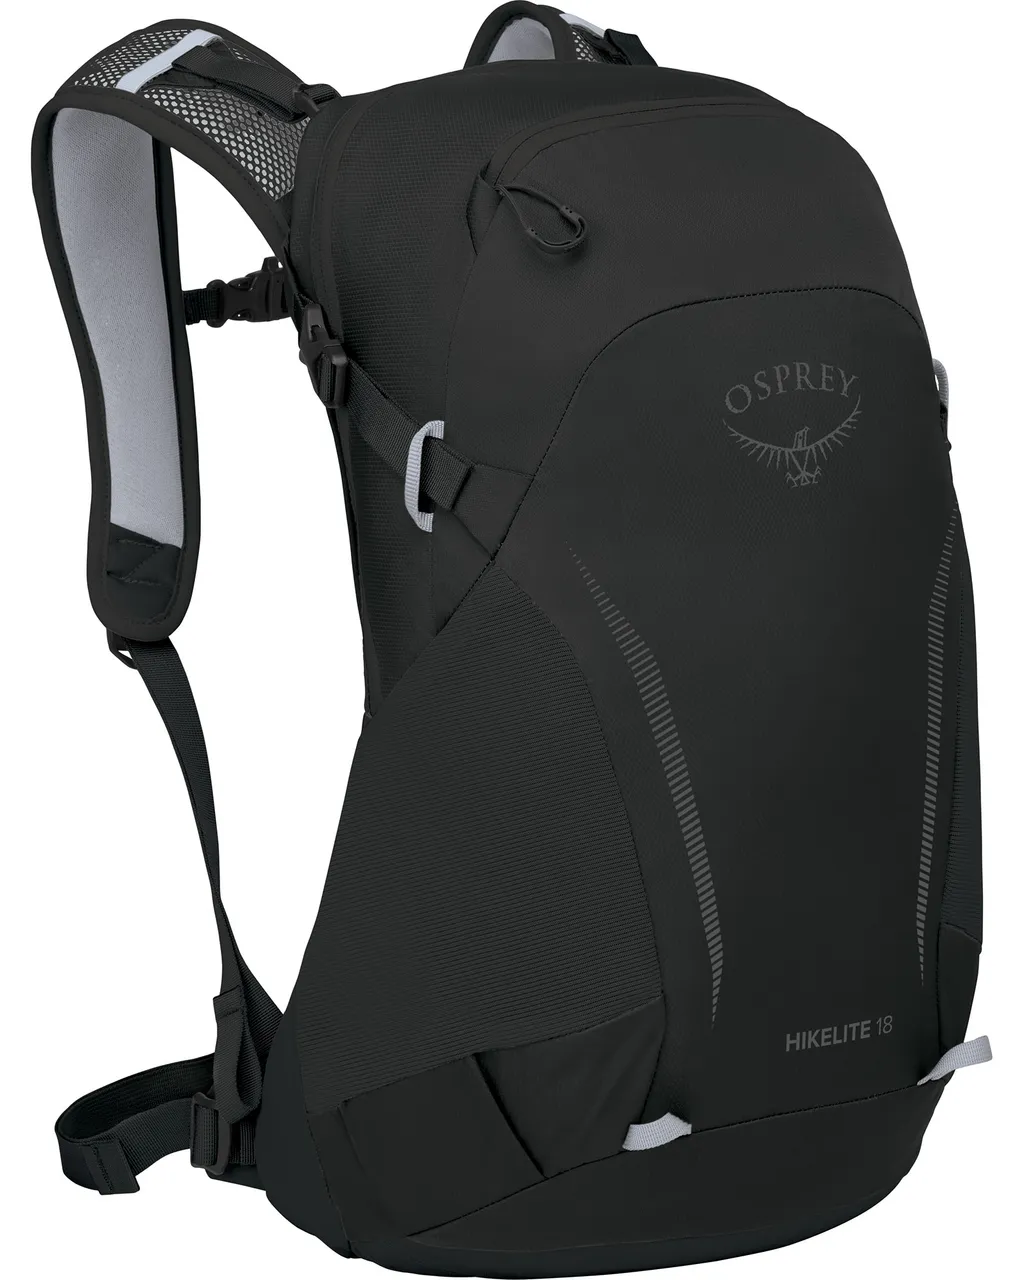 Osprey Hikelite 18 Backpack - black